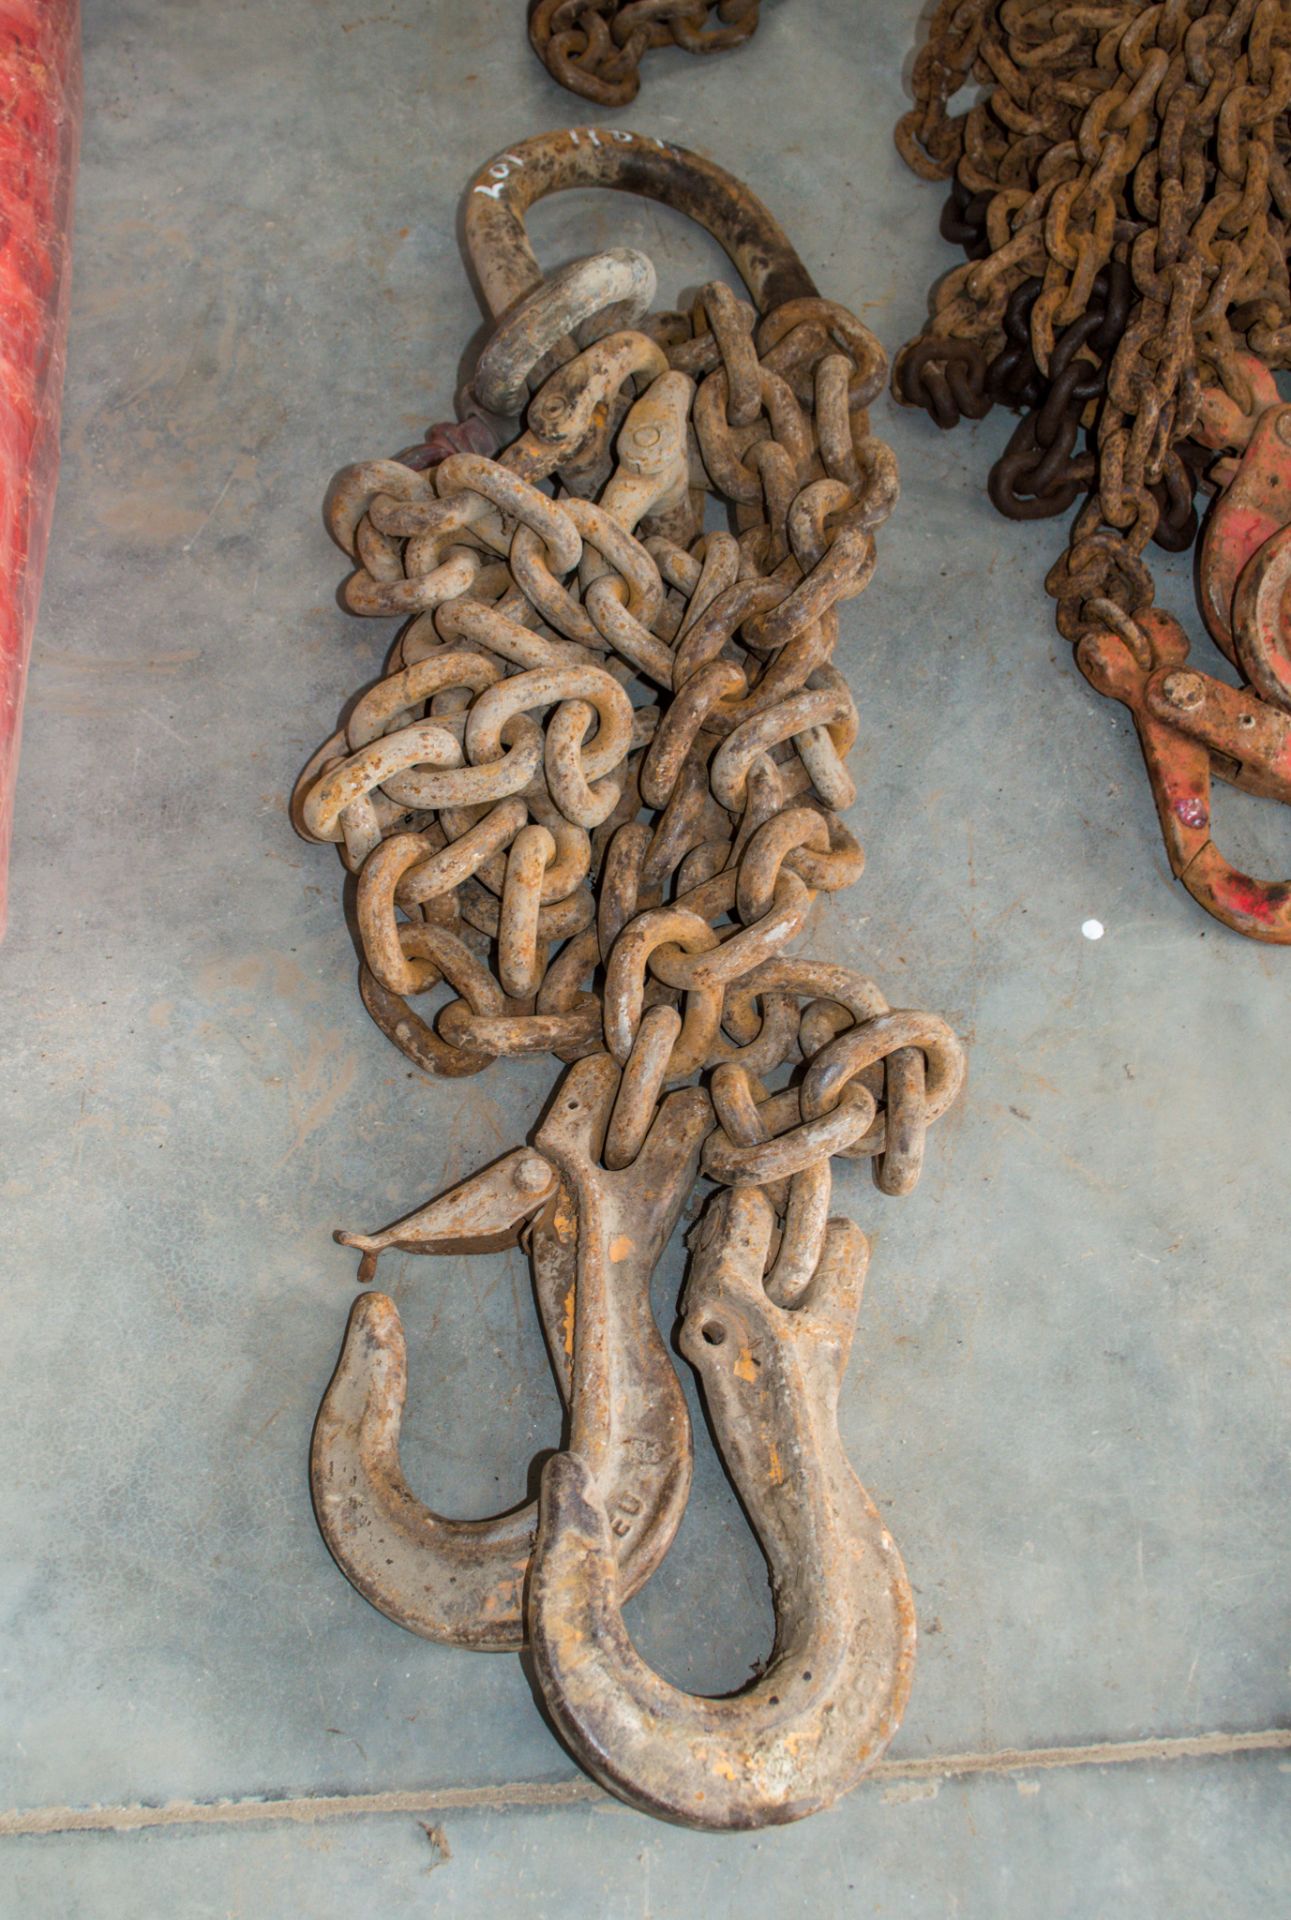 2 leg lifting chain